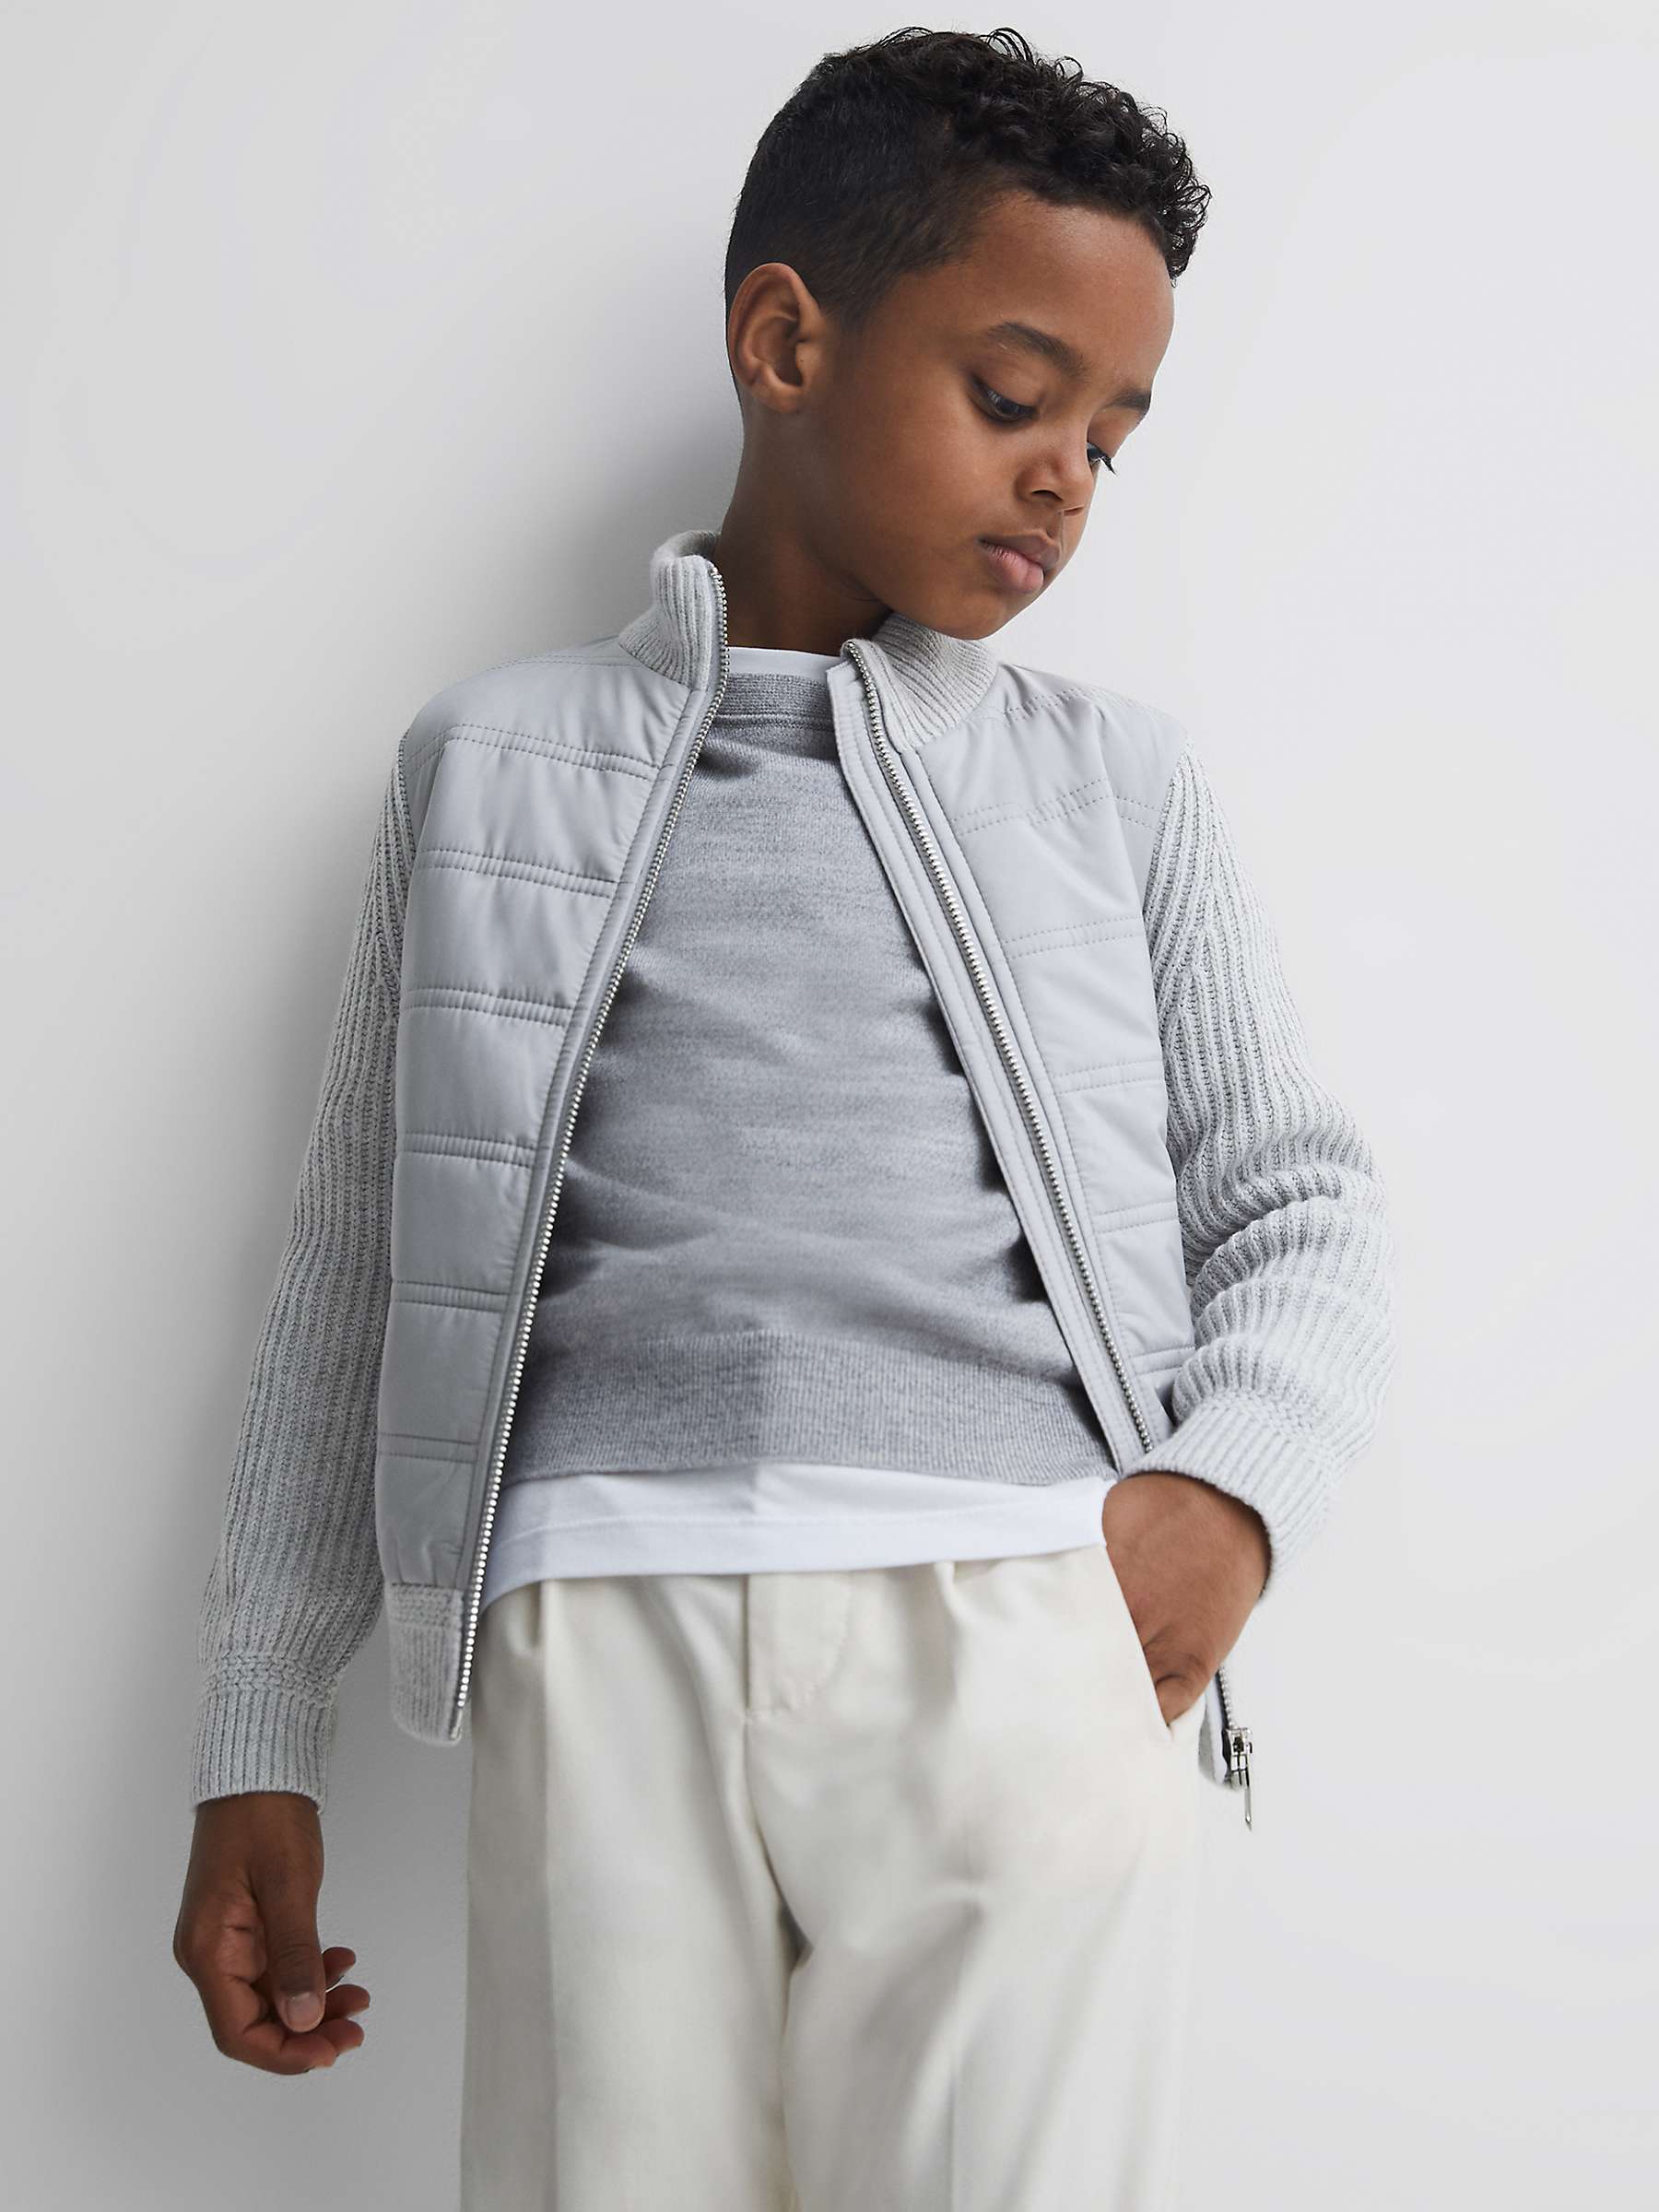 Buy Reiss Kids' Quilted Hybrid Cardigan, Soft Grey Melange Online at johnlewis.com